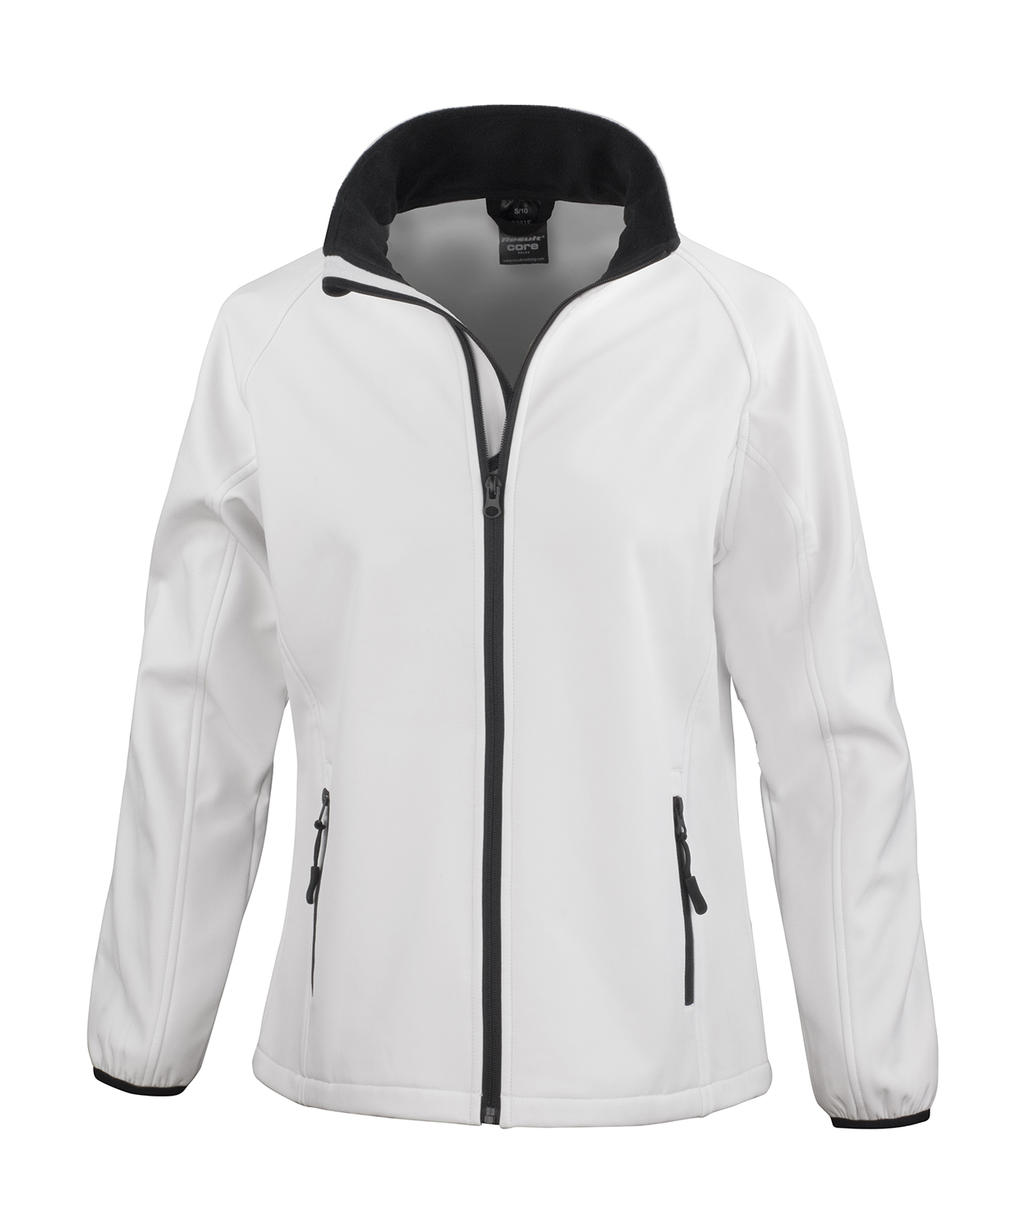  Ladies Printable Softshell Jacket in Farbe White/Black